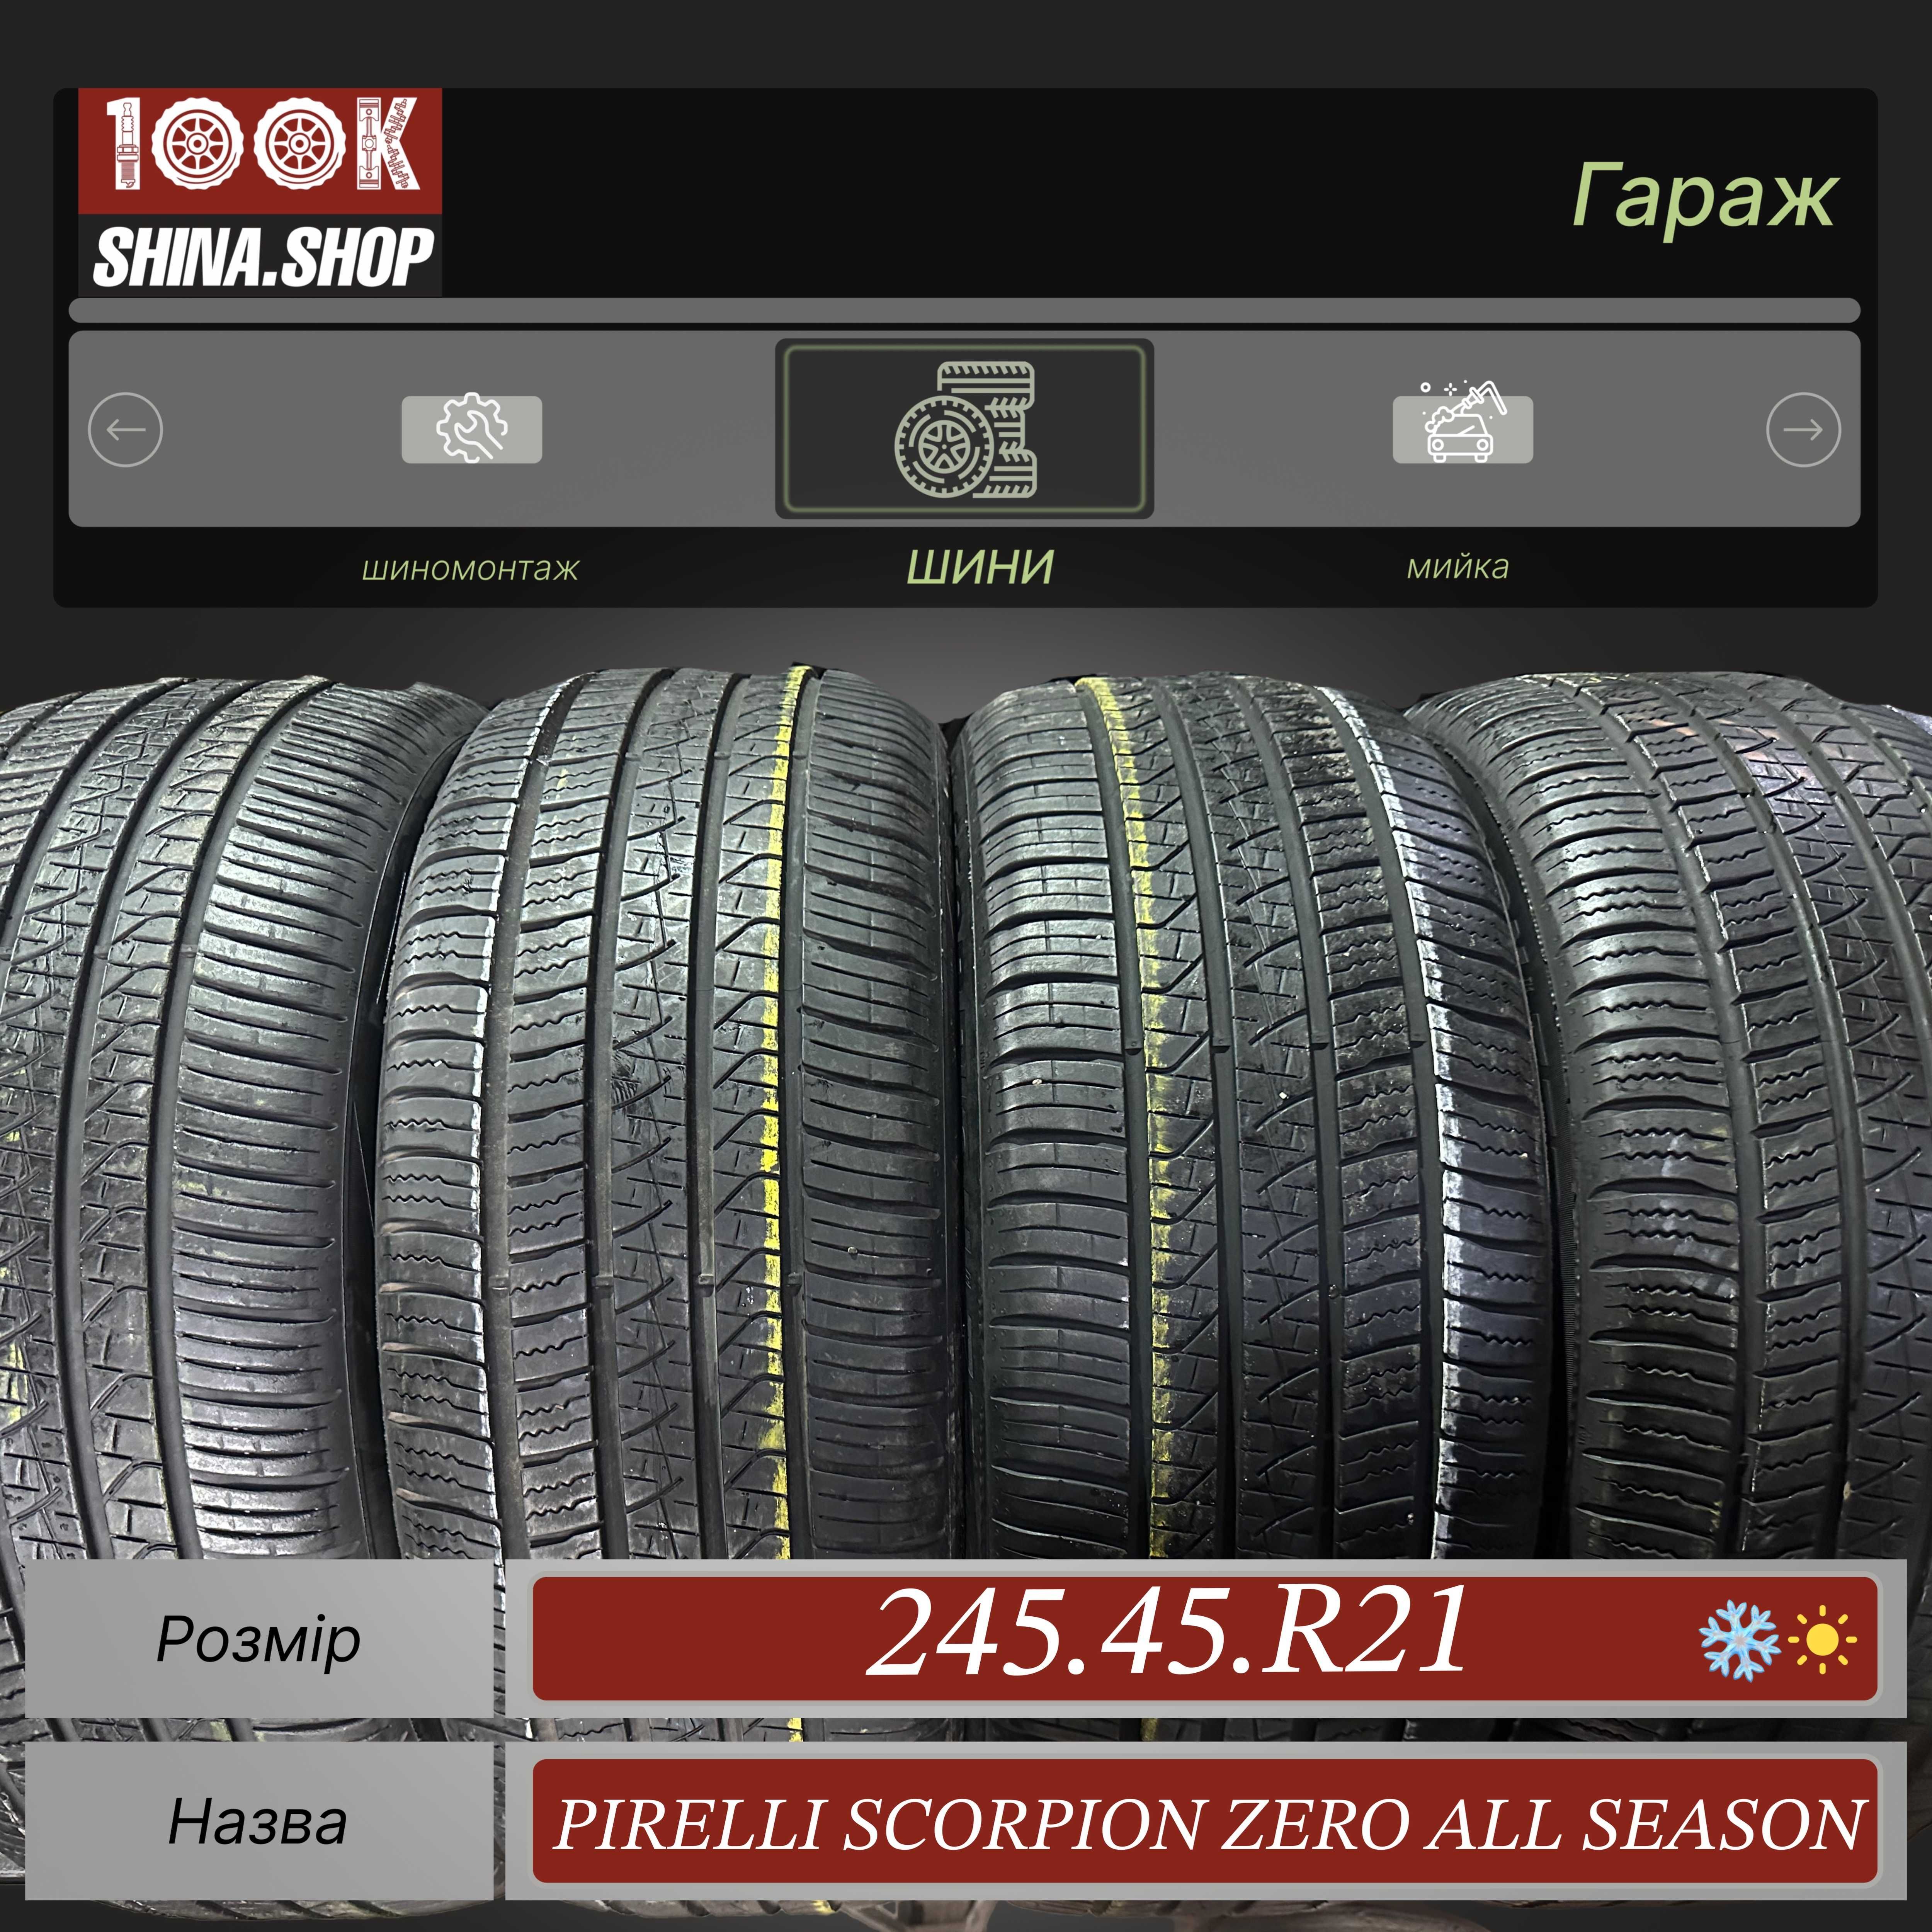 Шины БУ 245 45 R 21 Pirelli Scorpion Zero All season Резина